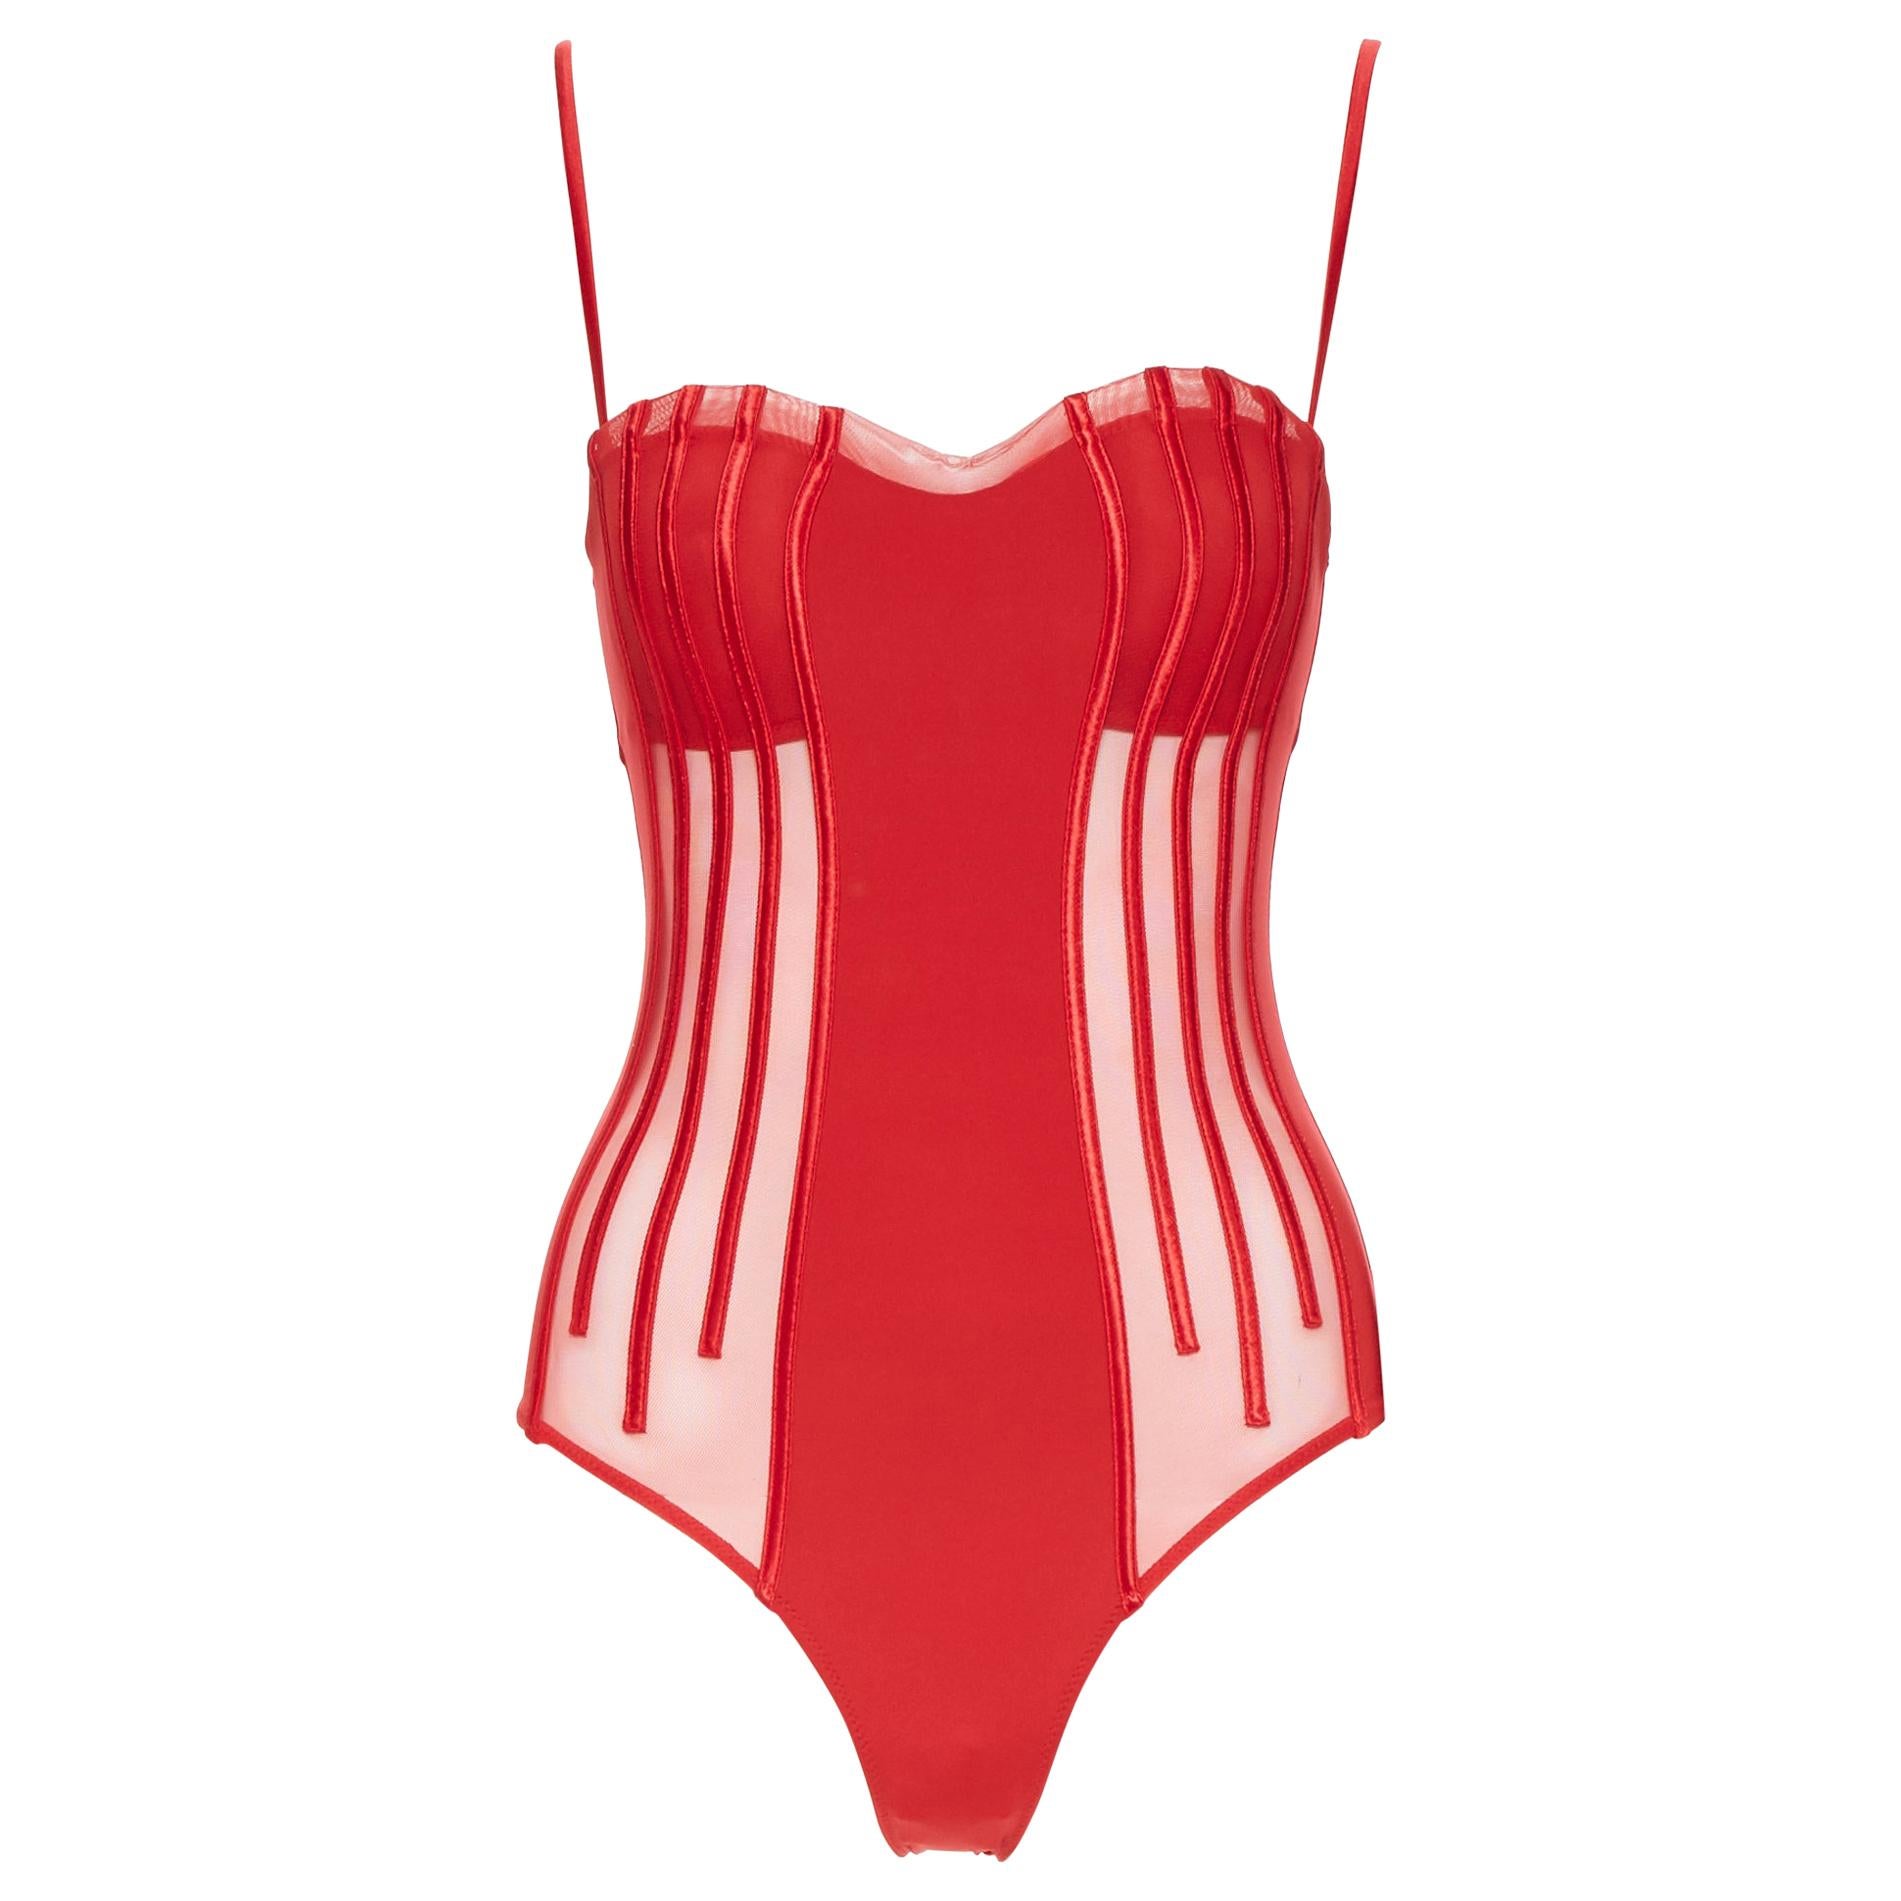 new LA PERLA Graphique Couture red boned sheer body monokini swimsuit IT44A M